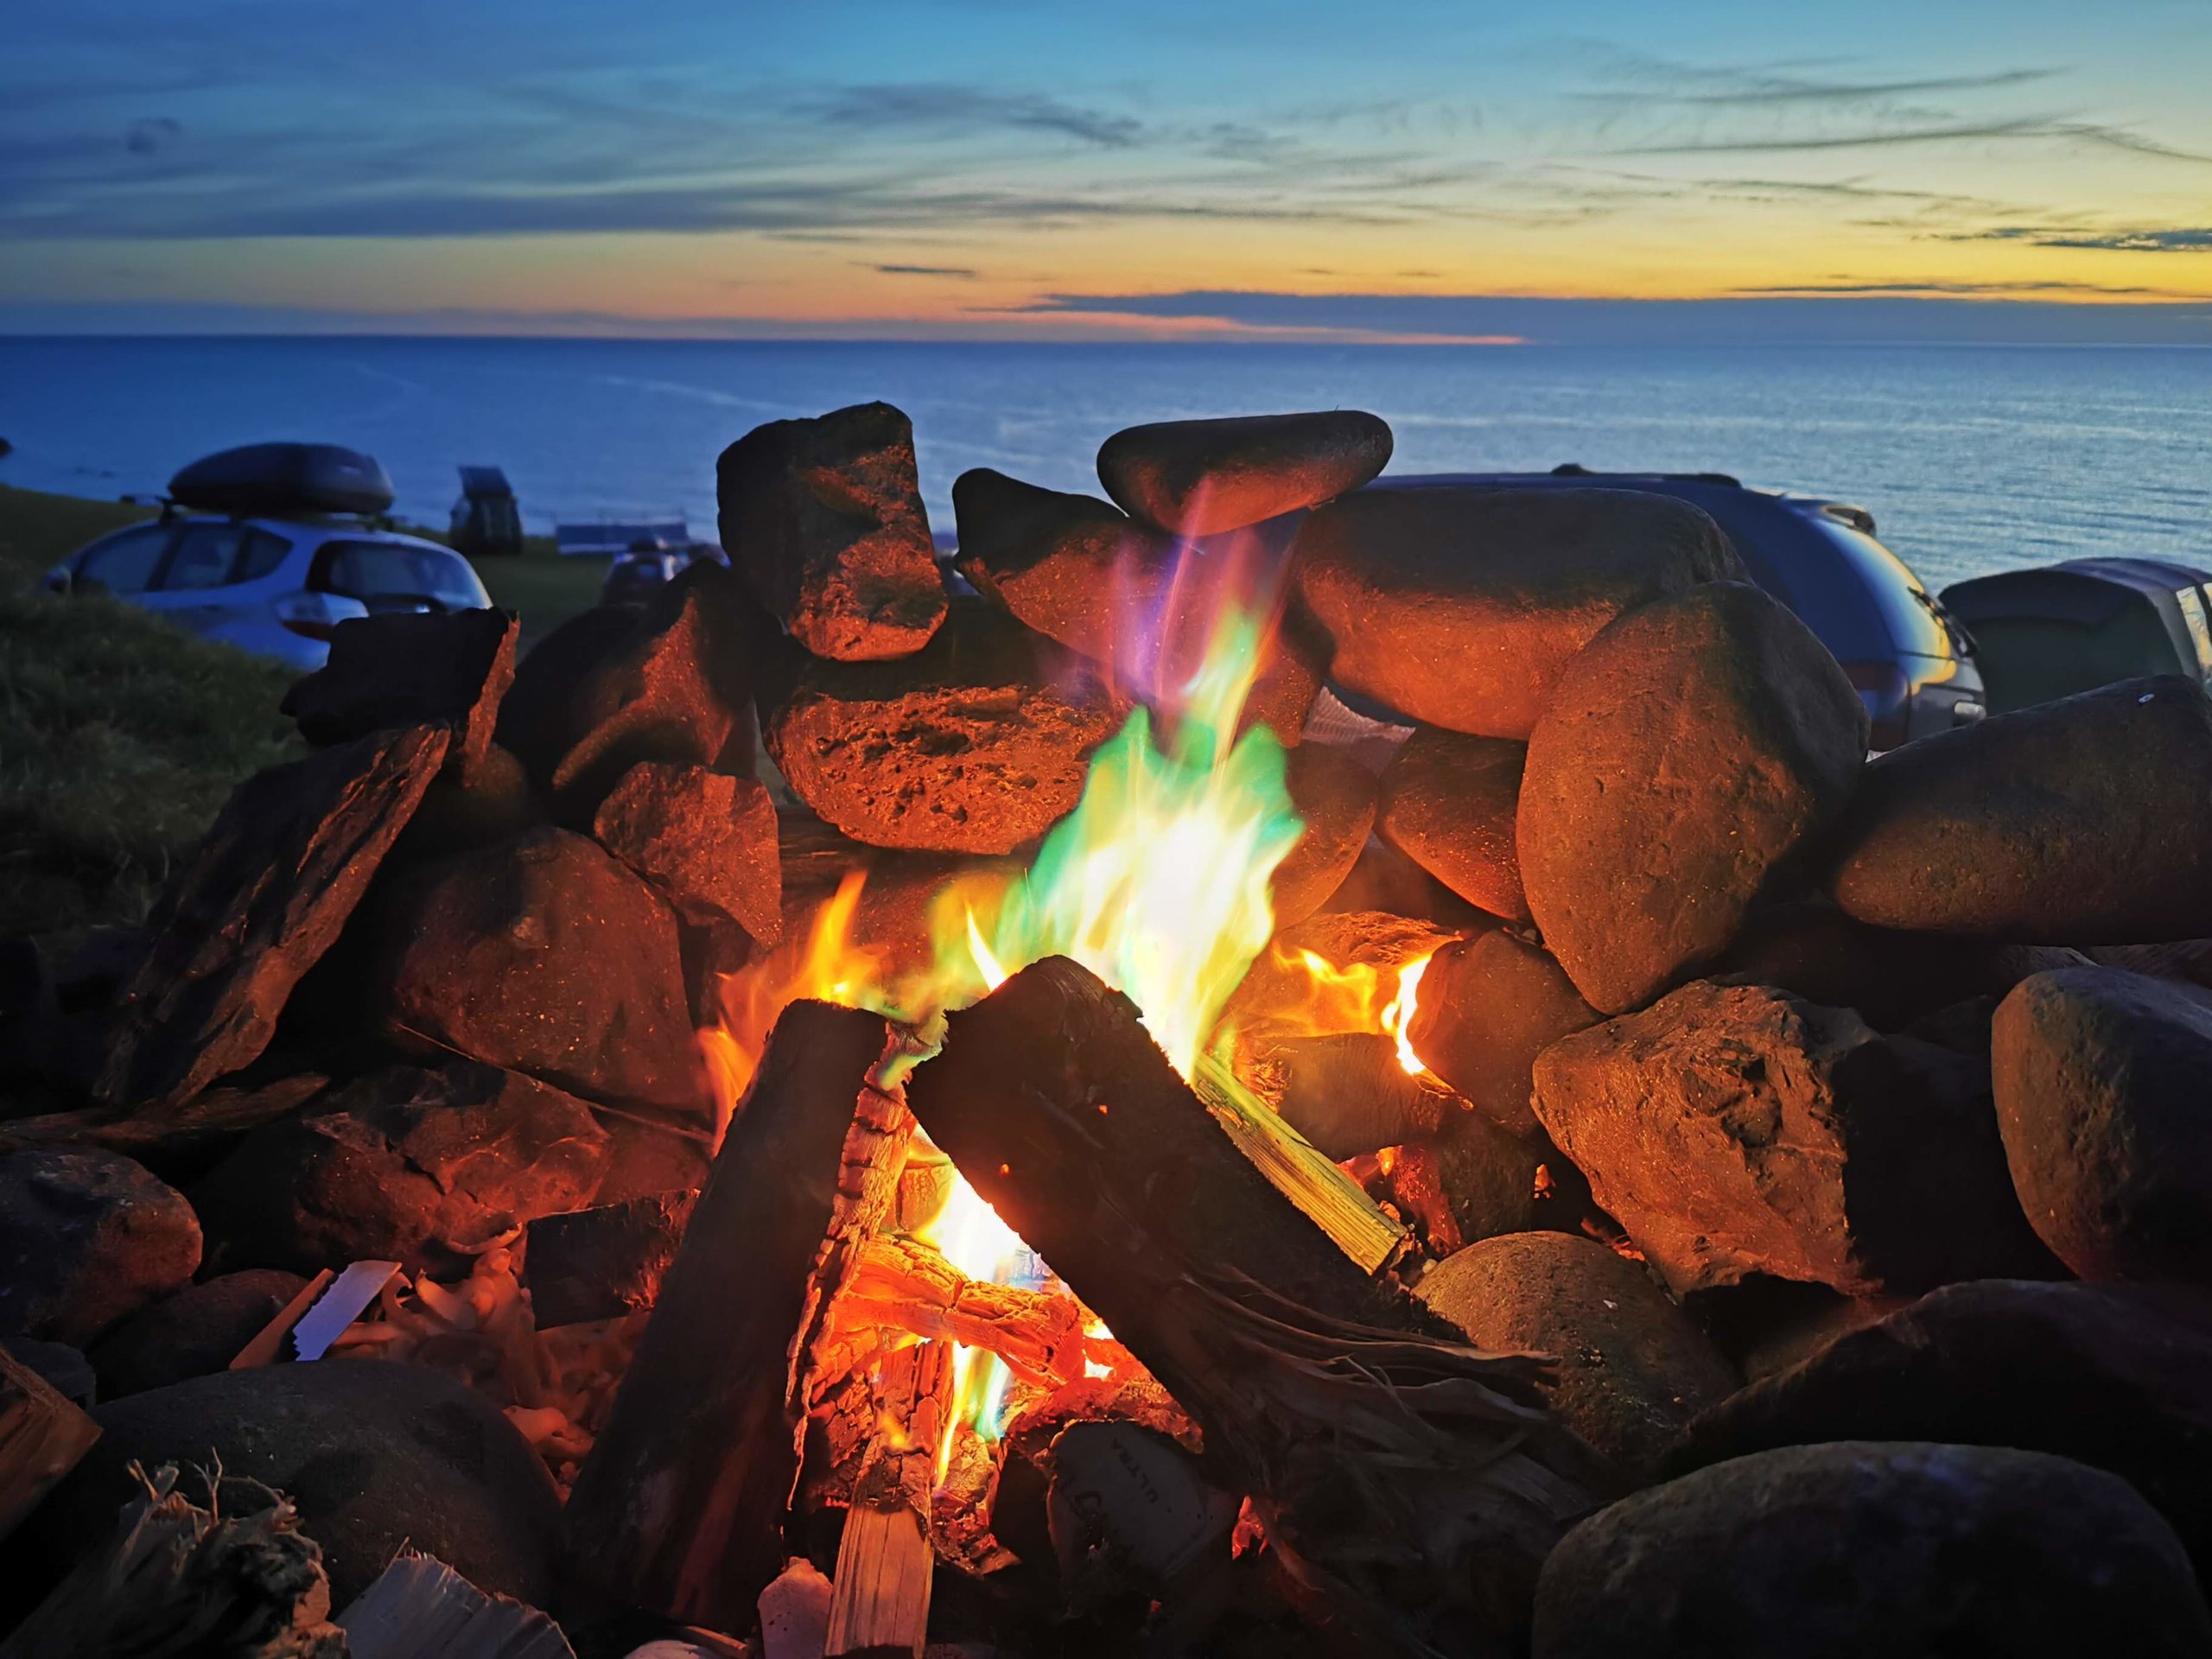 The simple primal joy of building a campfire